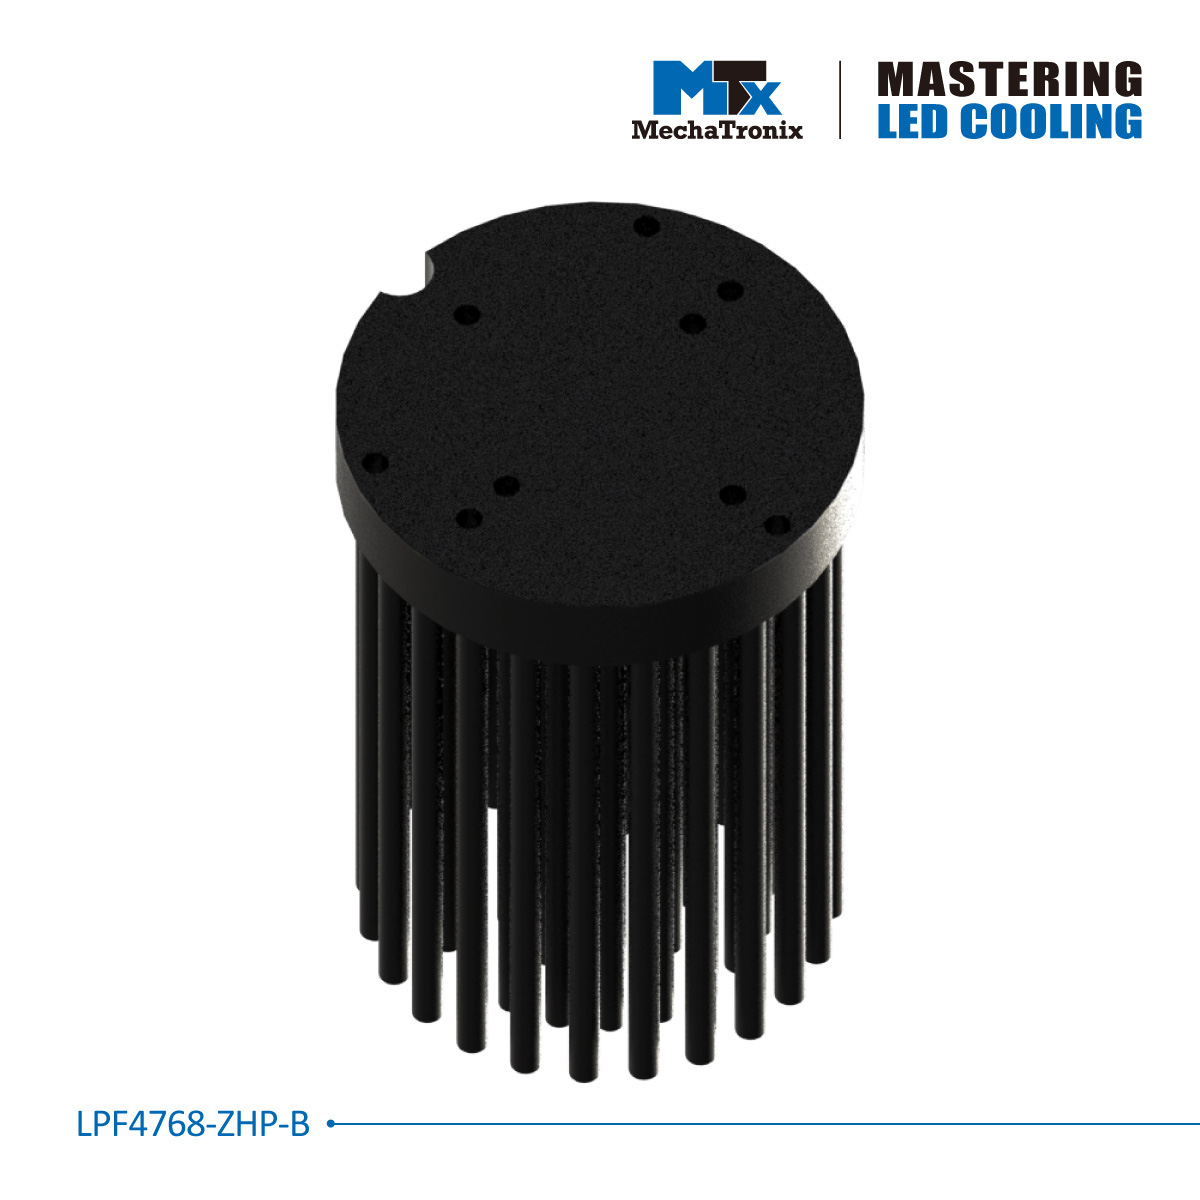 MechaTronix Heat Sink LPF4768-ZHP-B for LED <2500lm